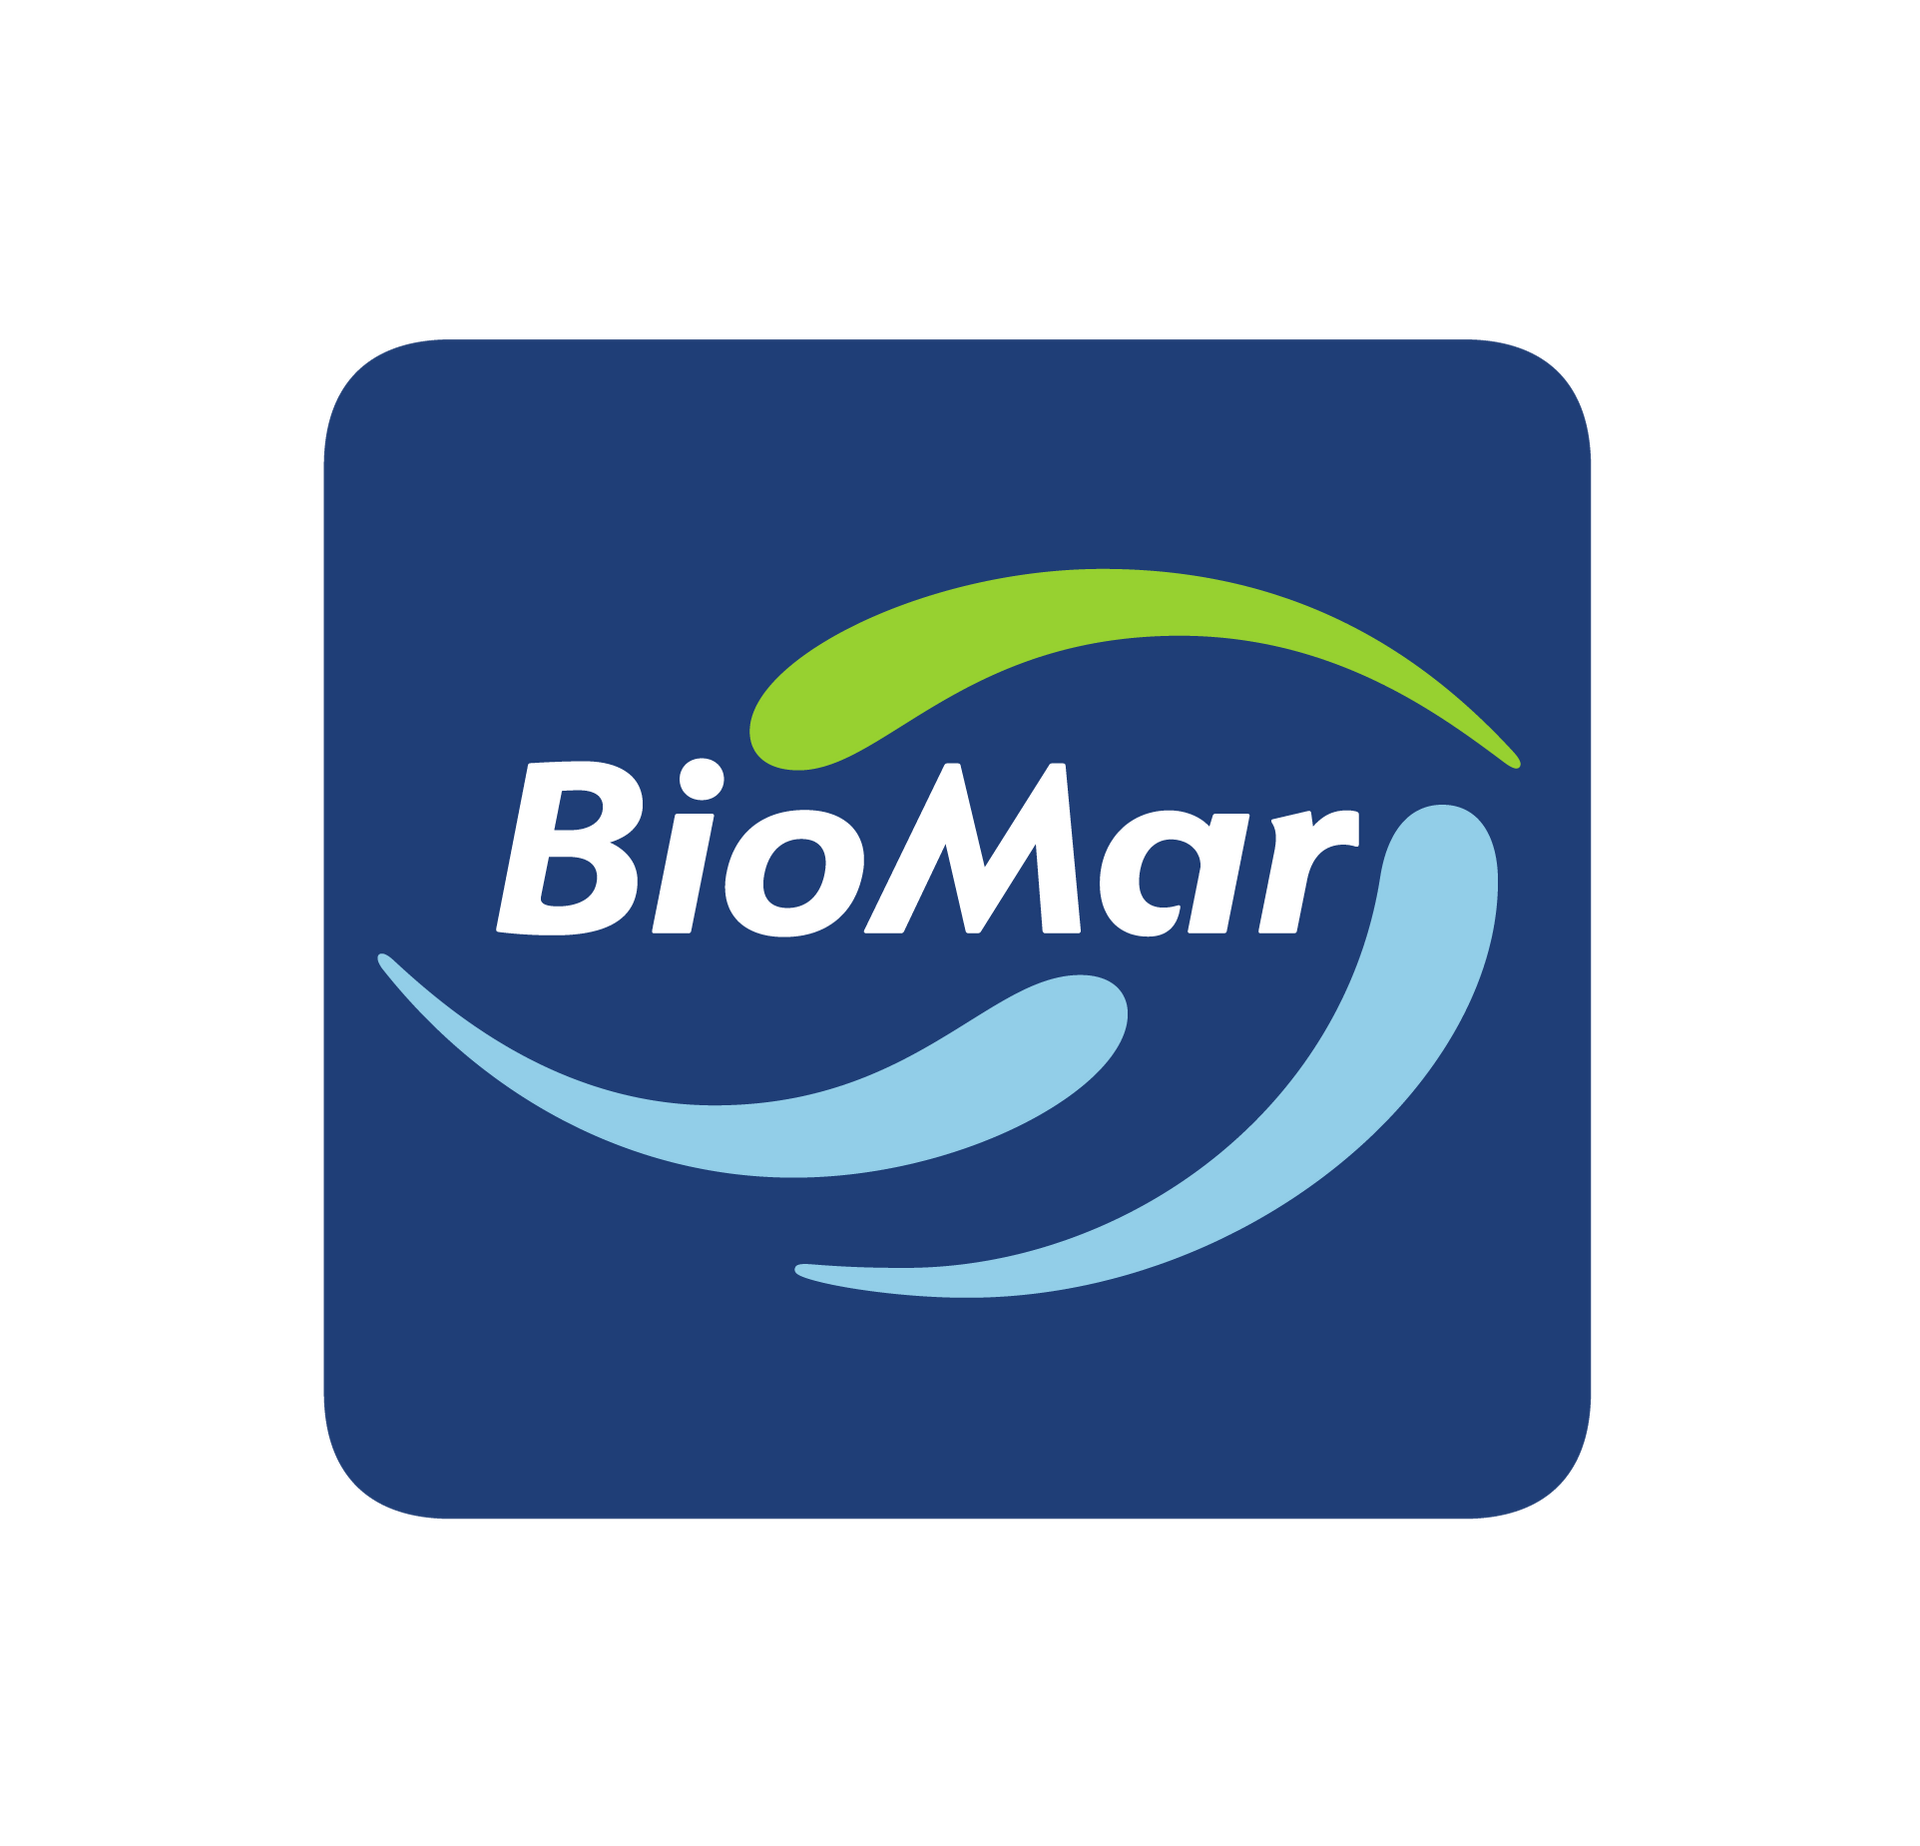 The official BioMar logo